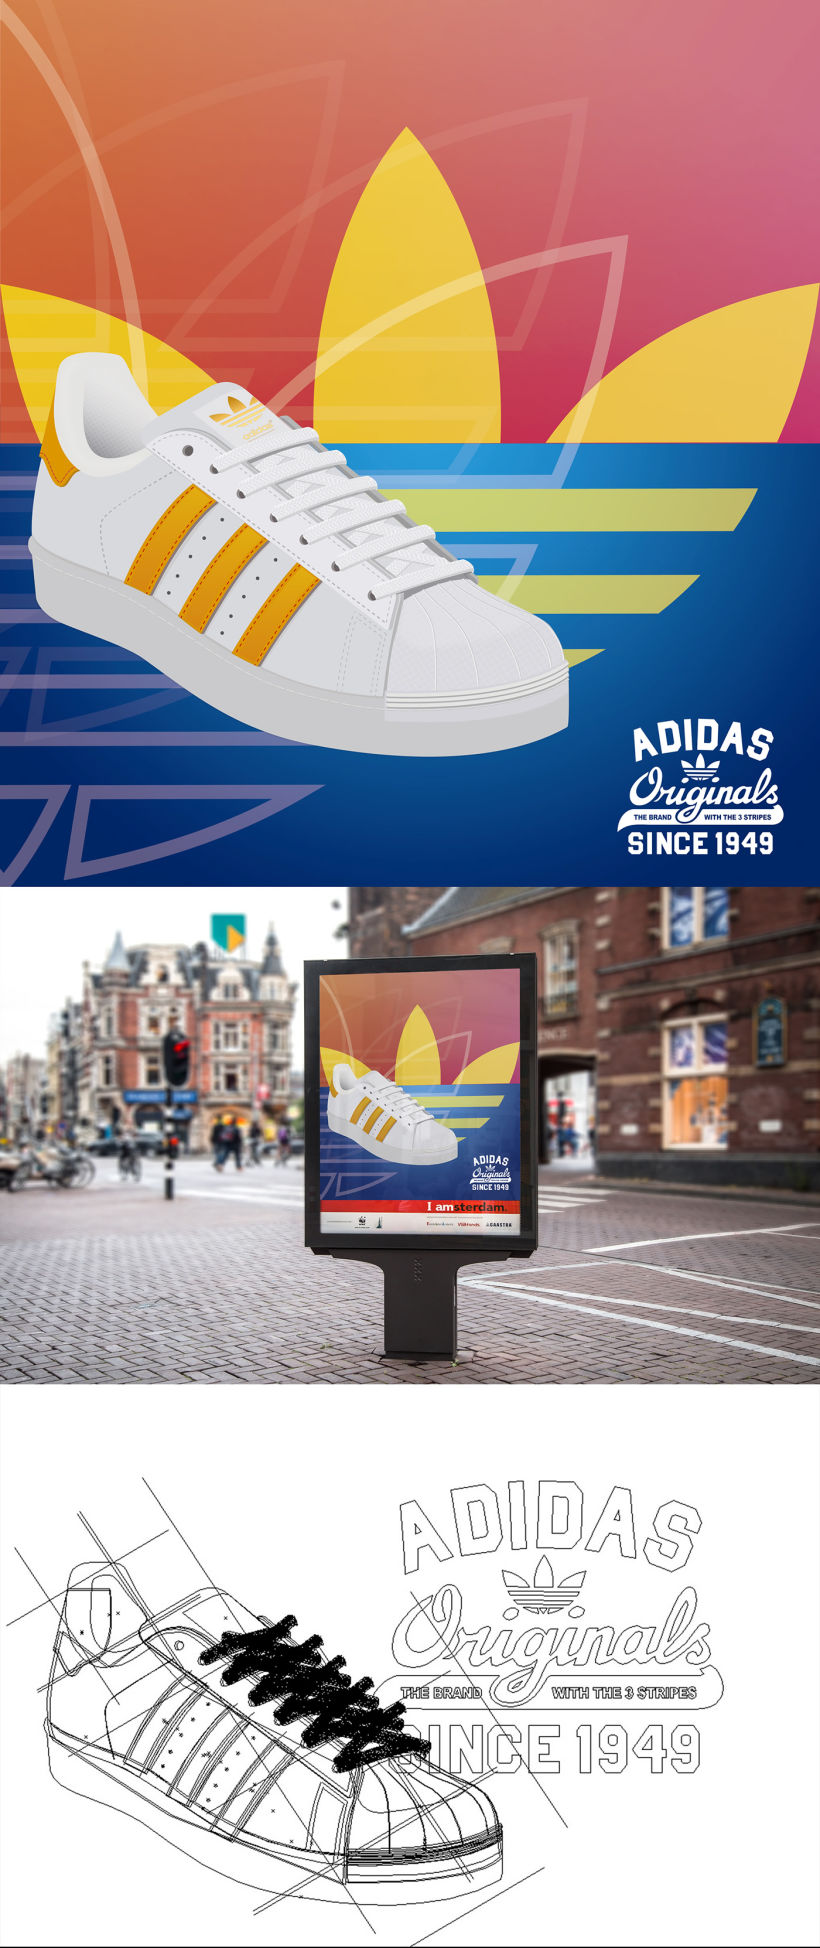  Adidas Originals Poster.  -1